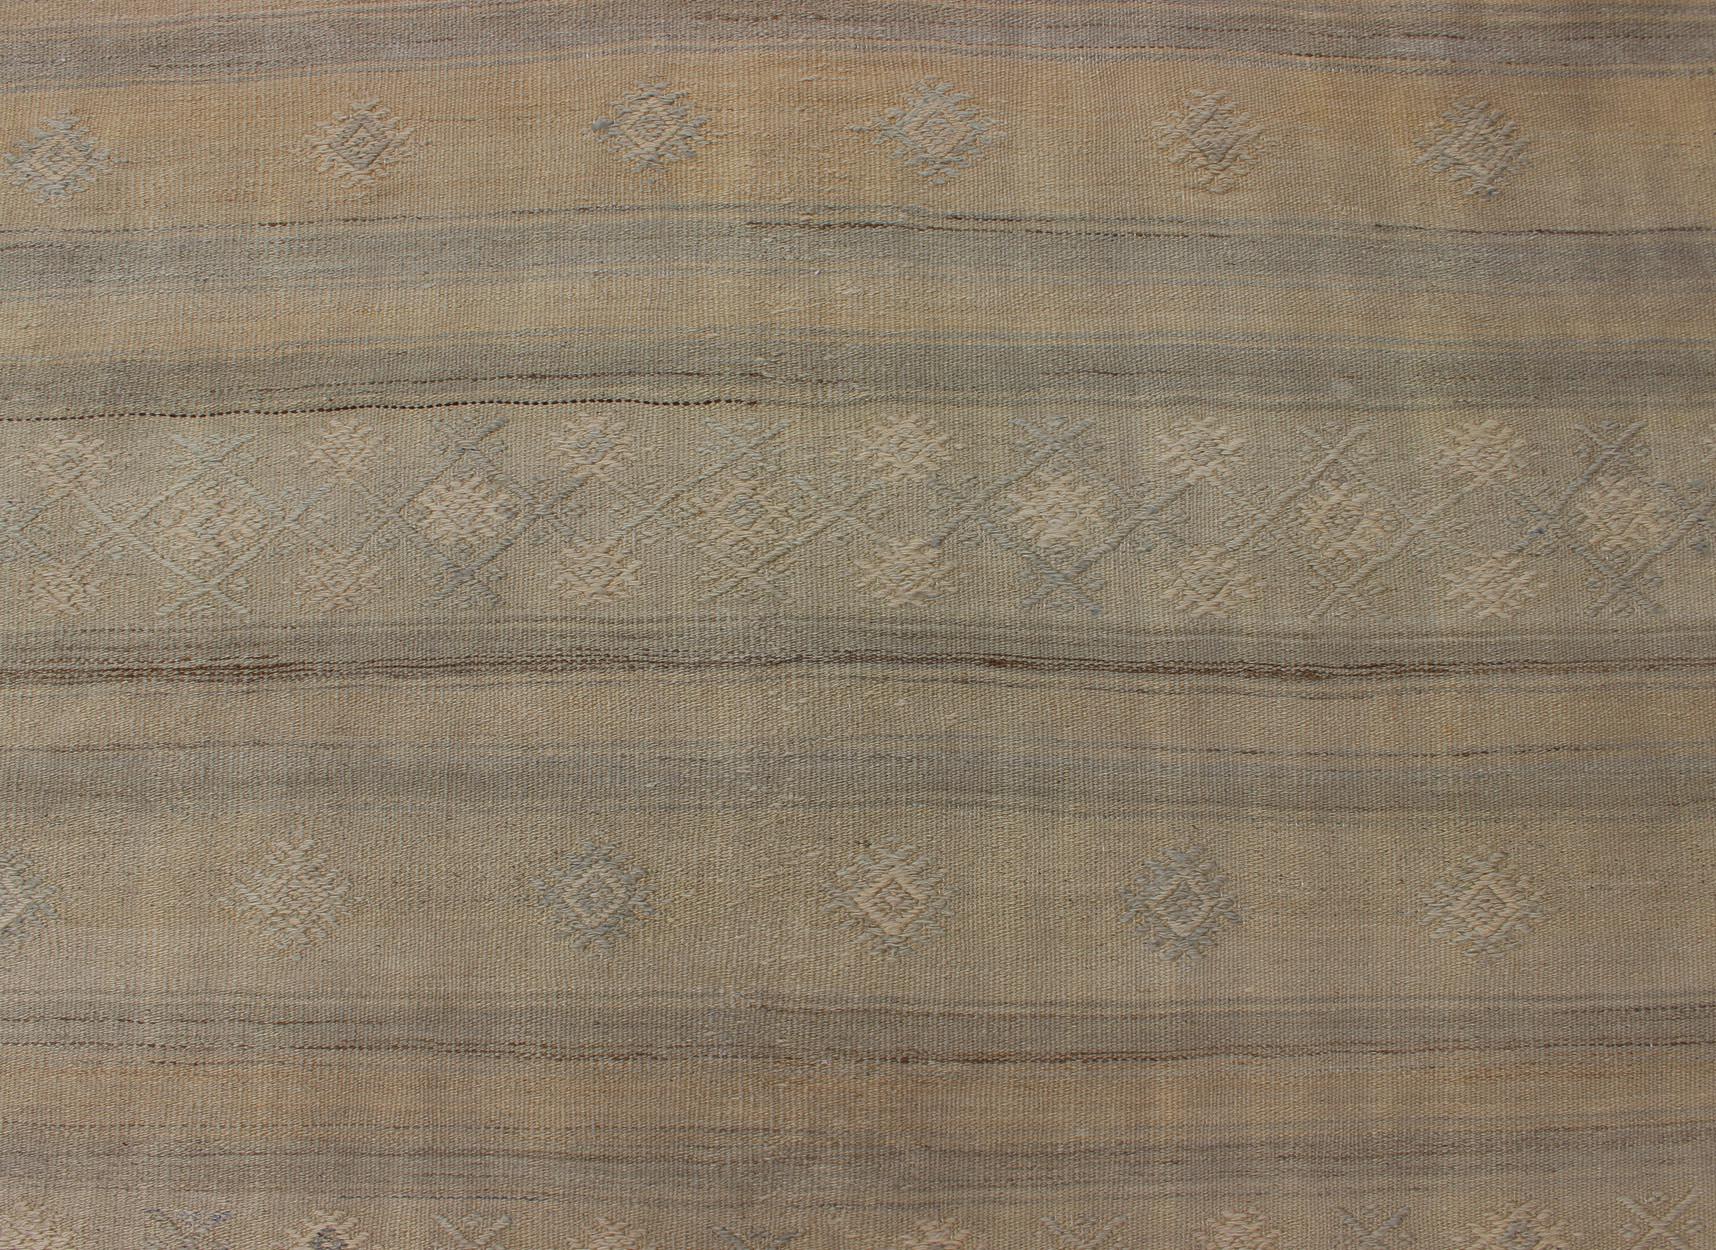 Vintage Turkish Kilim Gallery Rug with Stripe Design and Tribal Motifs in Brown 1